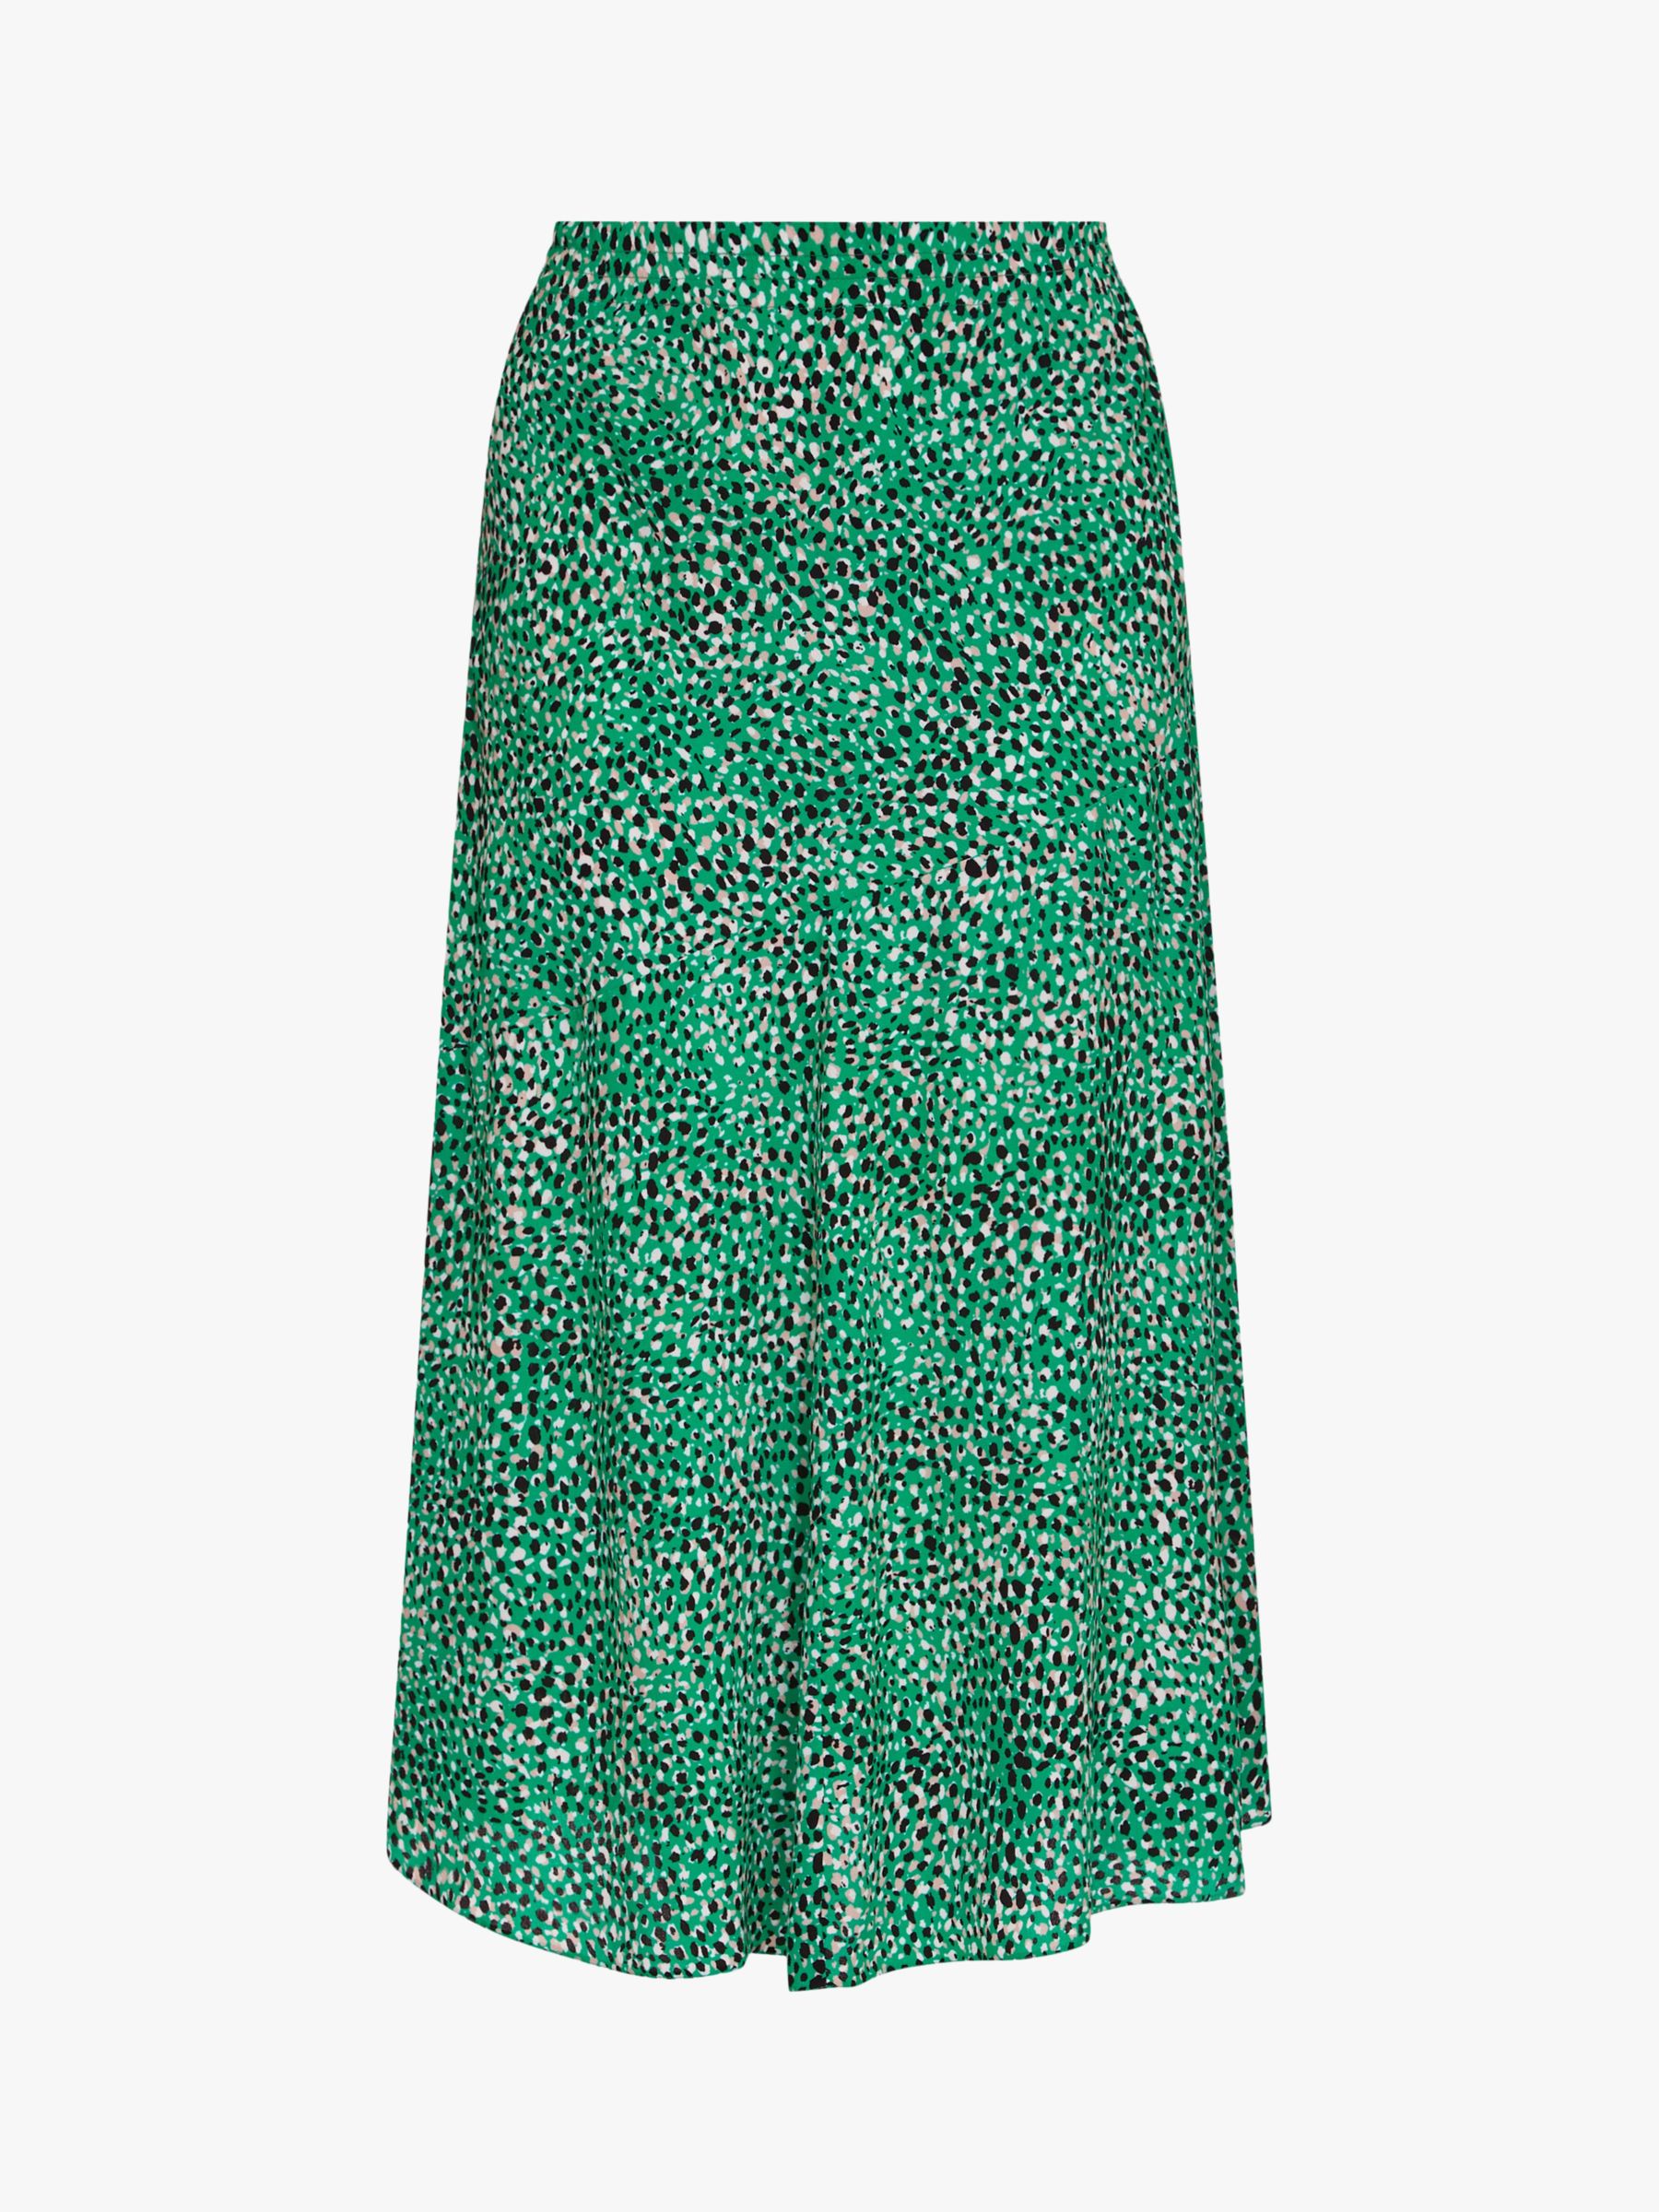 Live Unlimited Moroccan Midi Skirt, Jade Green